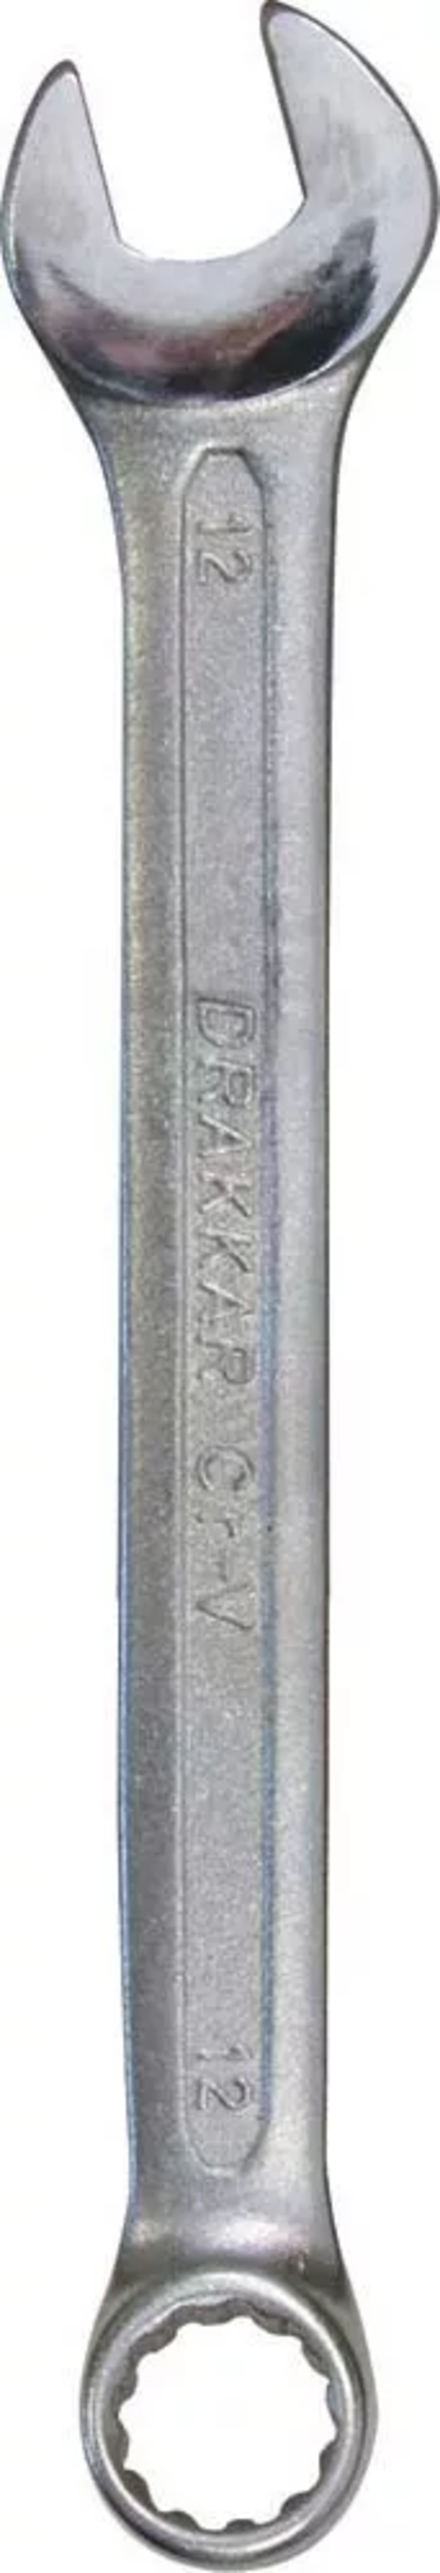 Cle mixte tete polie 12mm DRAKKAR TOOLS - 13762